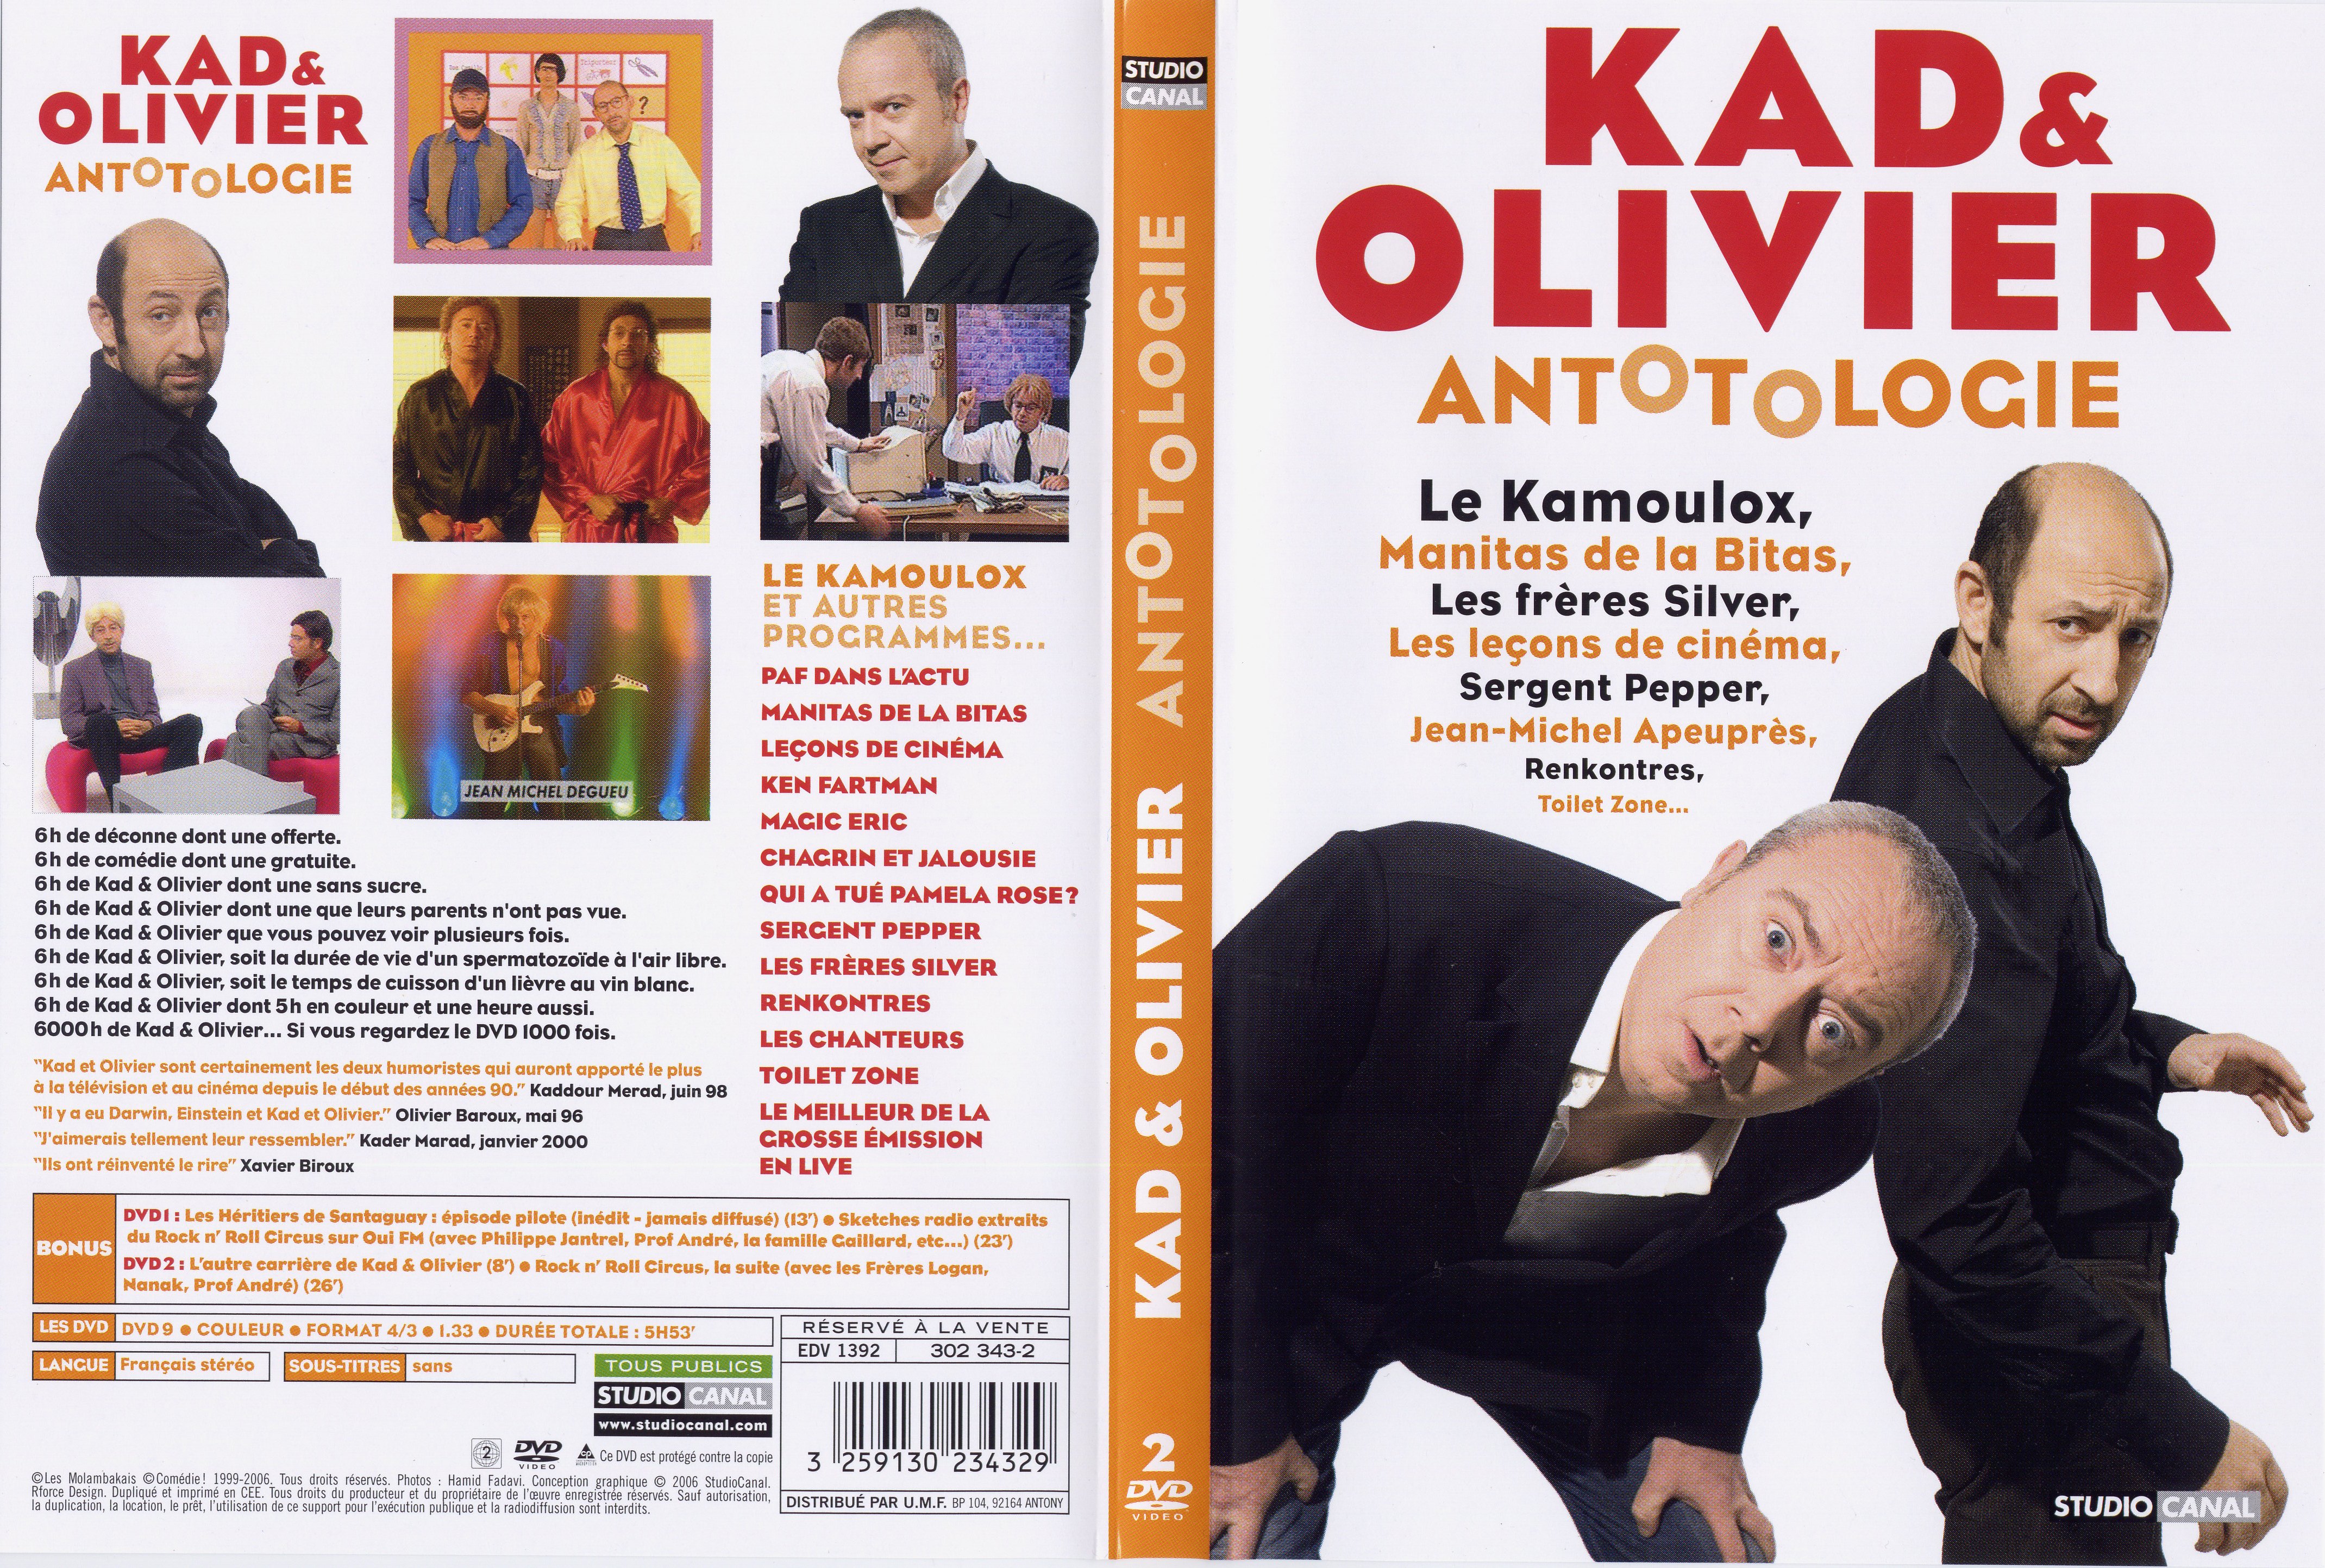 Jaquette DVD Kad et Olivier - Antotologie